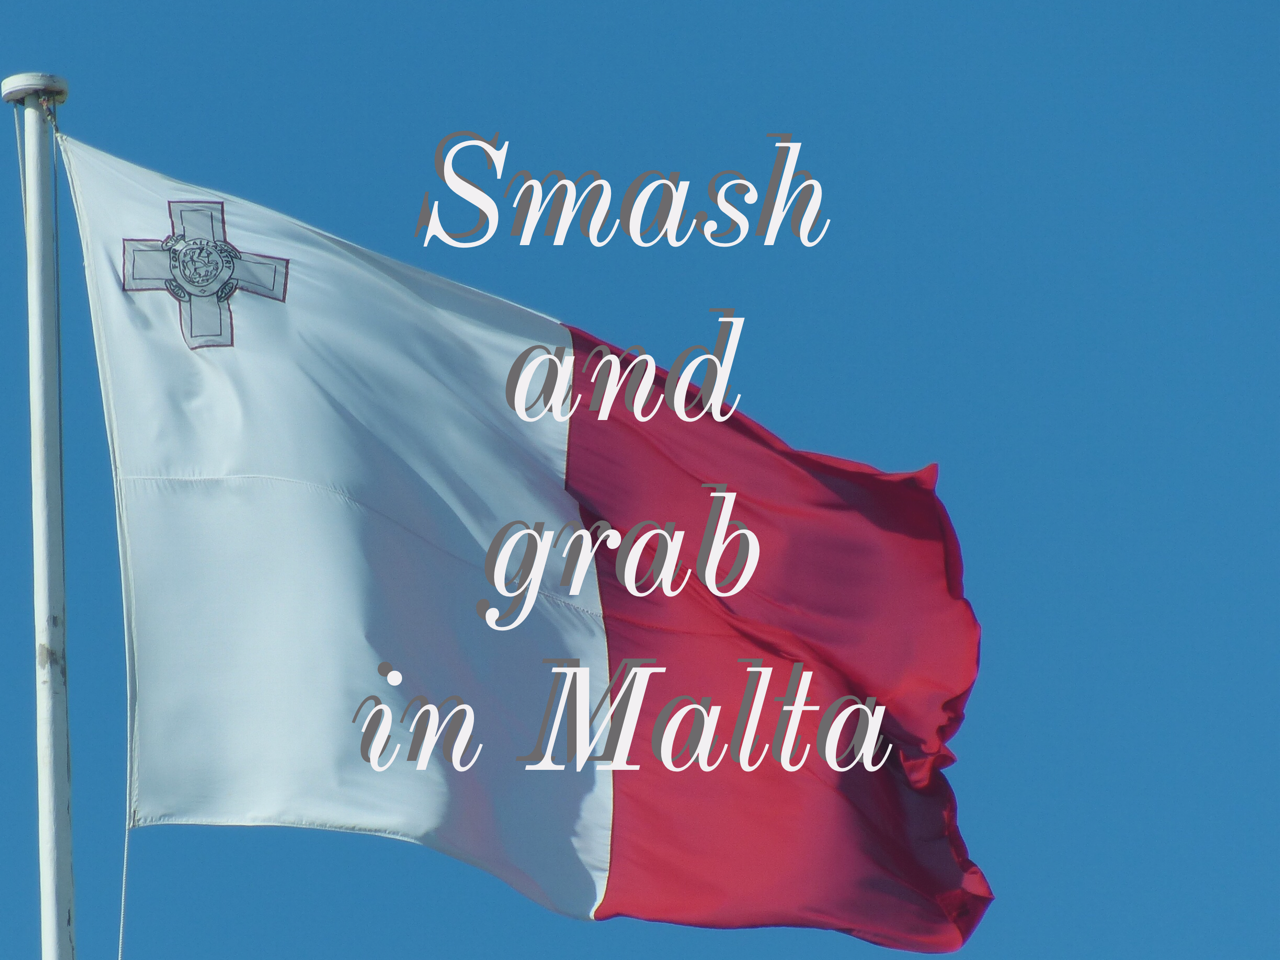 Smash and grab in Malta Image